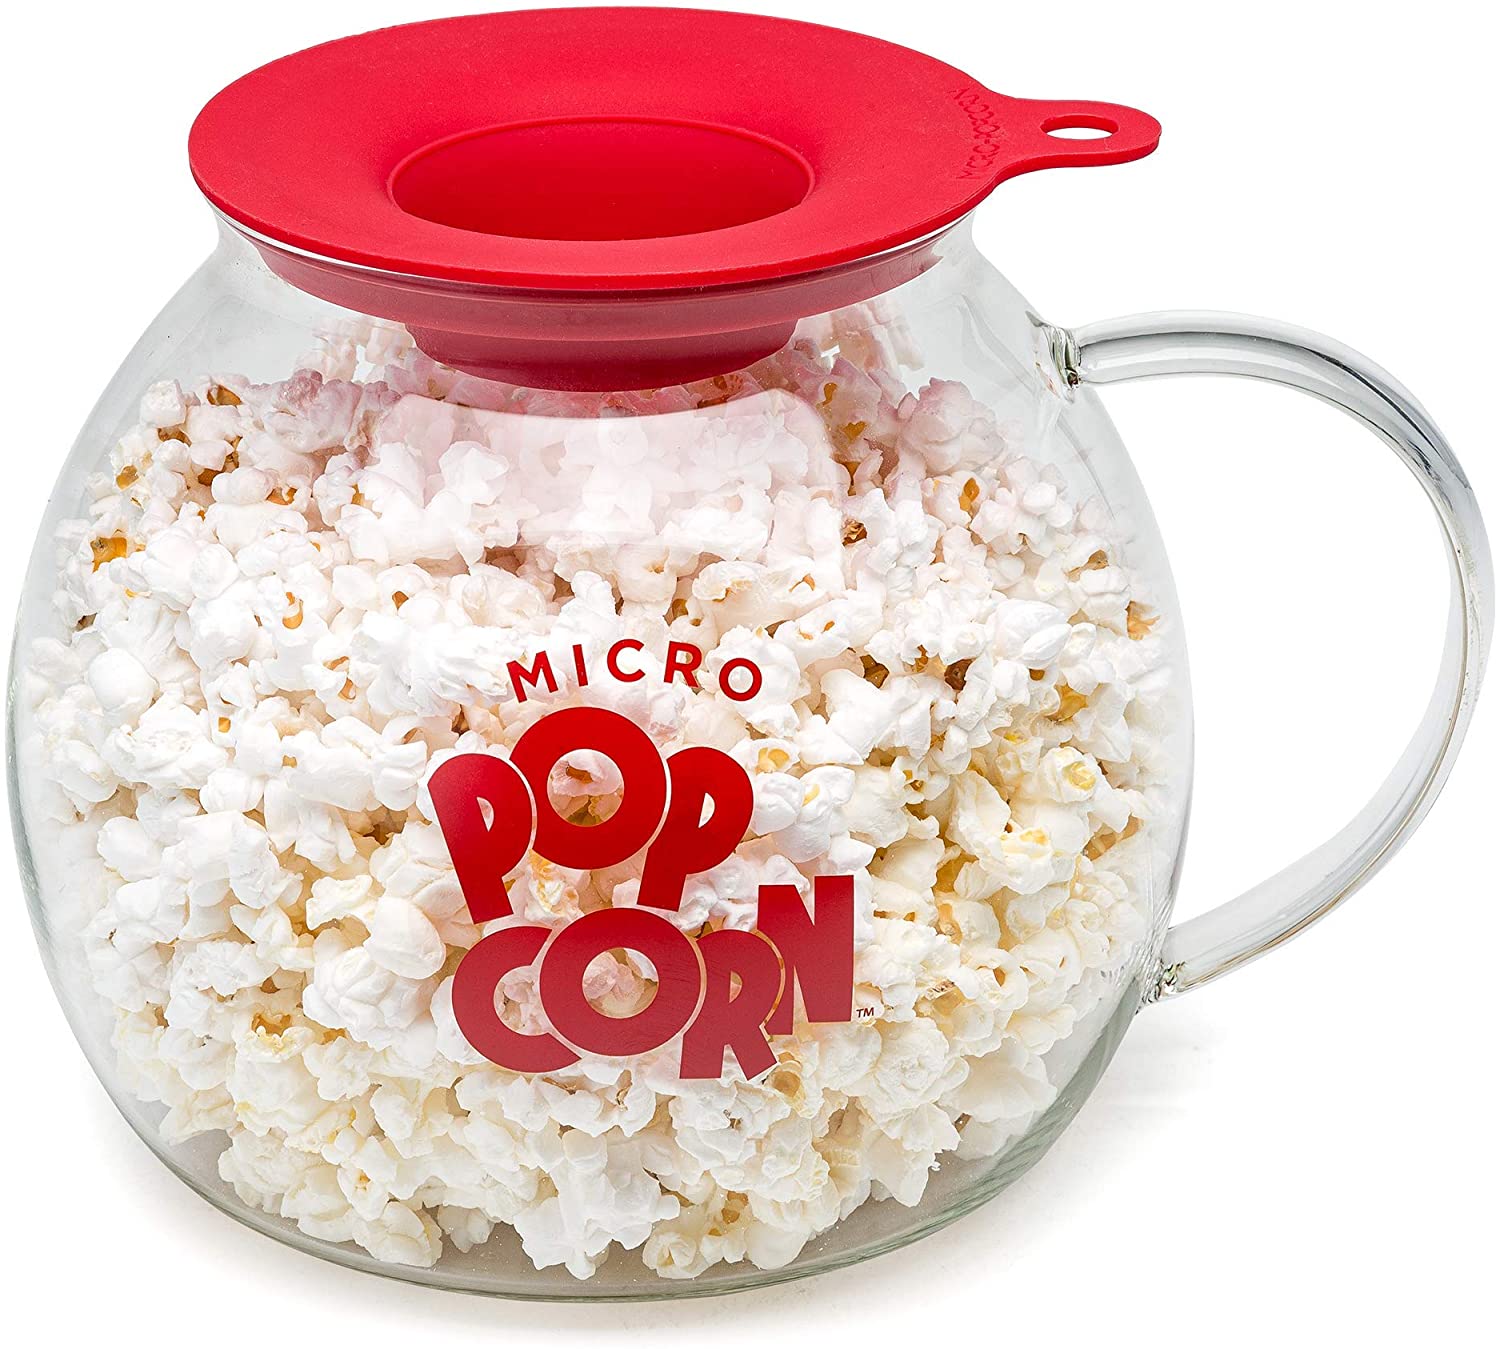 Ecolution Popcorn Popper